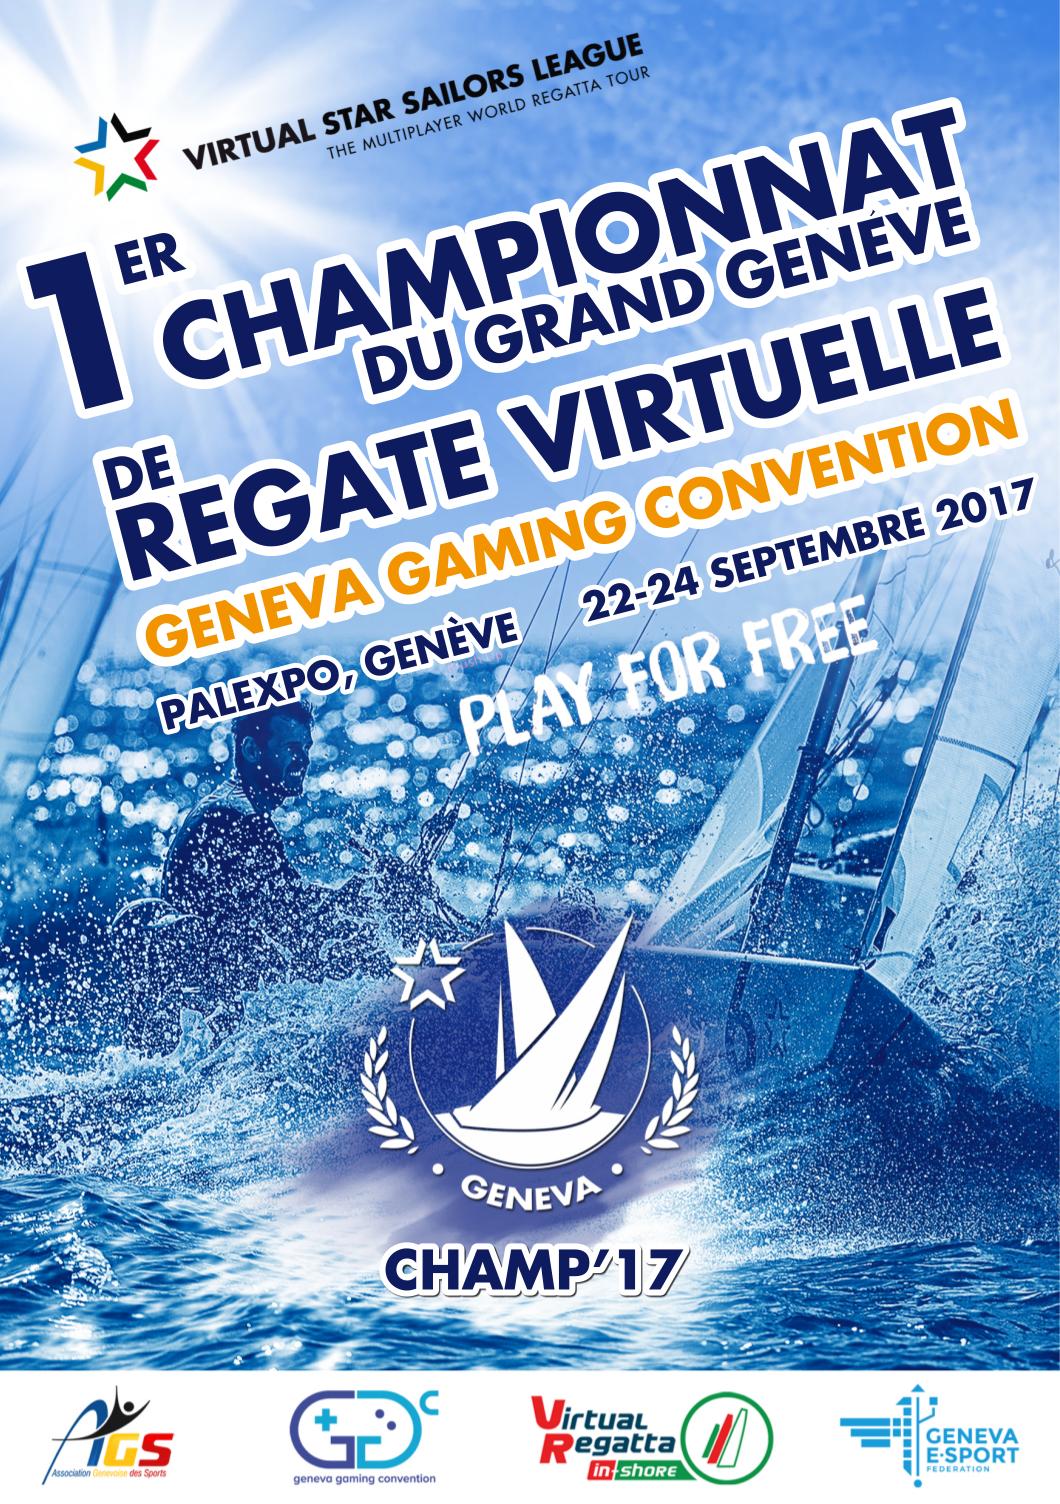  Virtual Sailing  Virtual SSL, Palexpo Hall 1  Genf  Start today